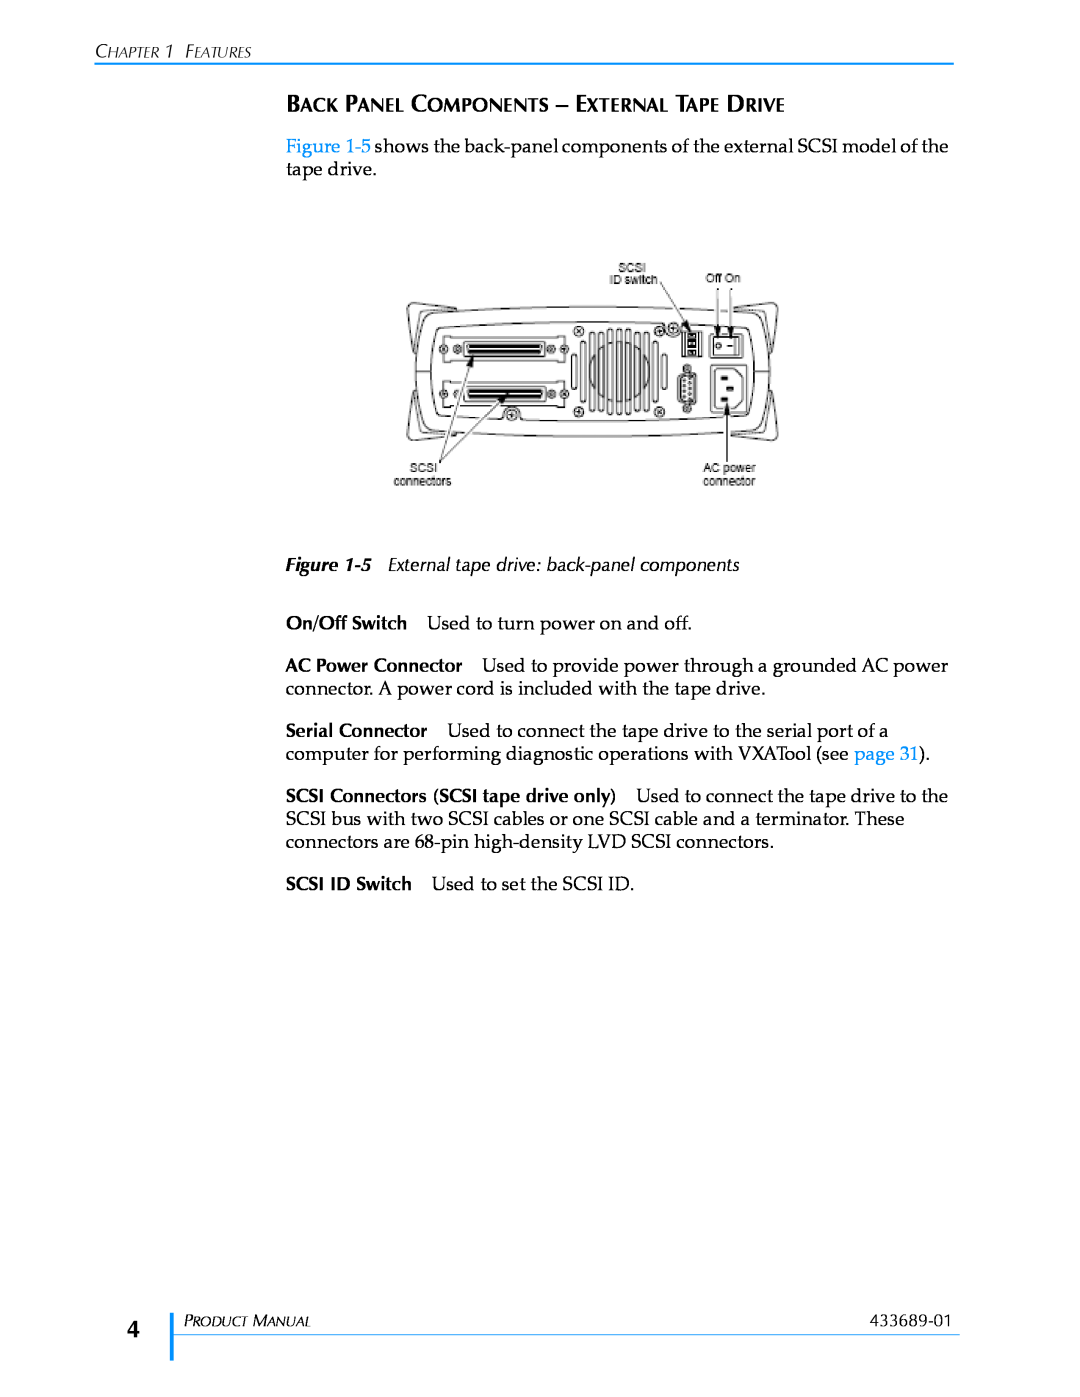 Tandberg Data VXA-320 (VXA-3) manual Back Panel Components – External Tape Drive 